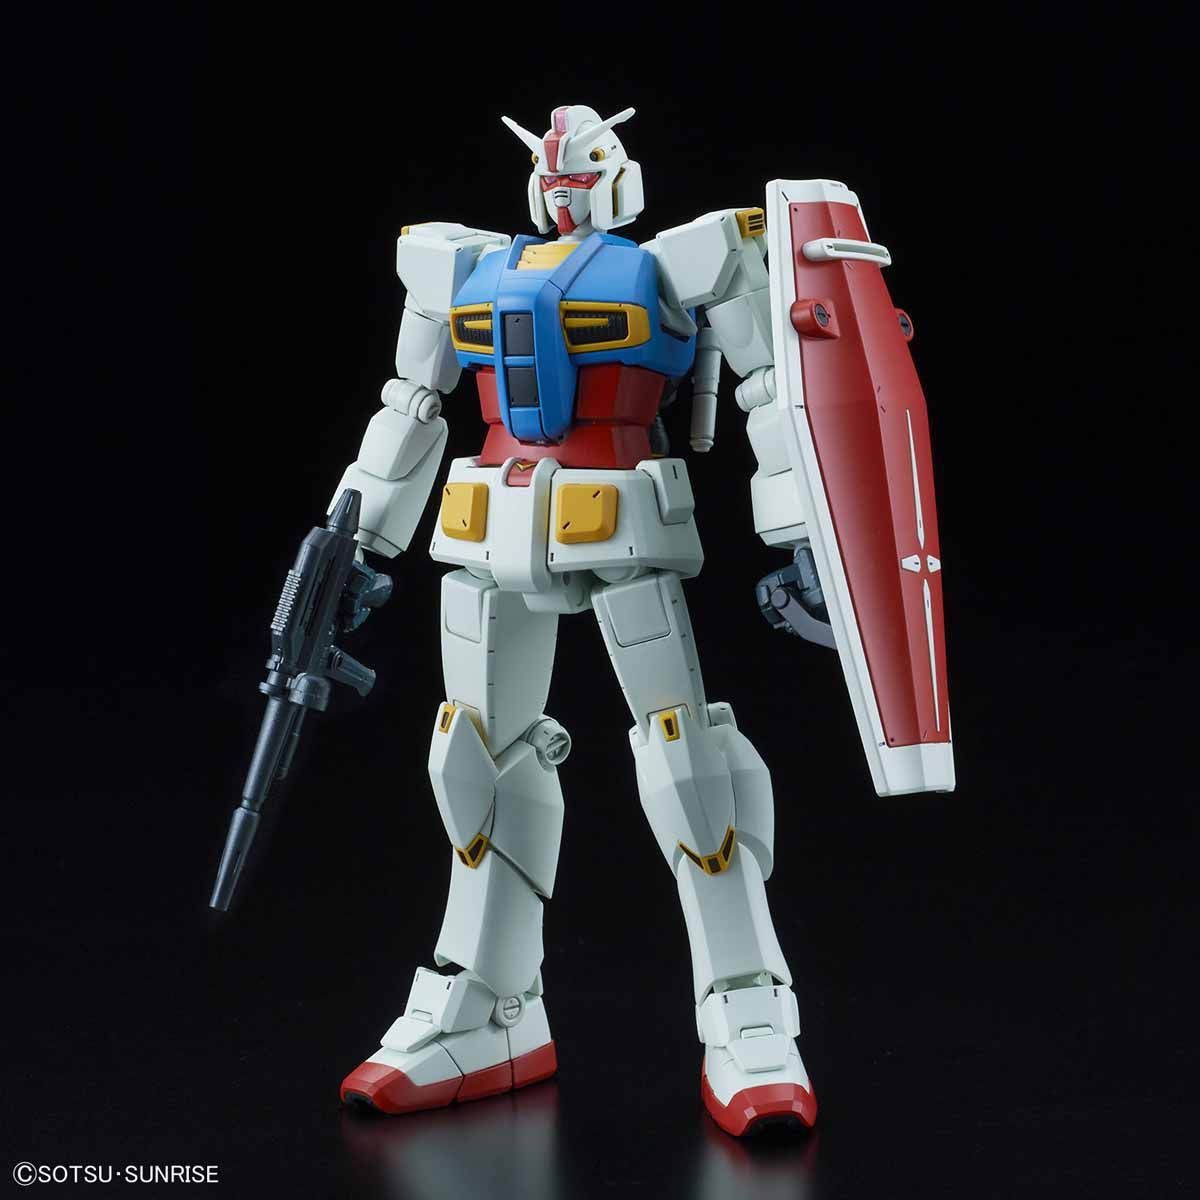 Gundam 1/144 HG RX-78-2 Gundam G40 (Industrial Design Ver.) Model Kit Exclusive